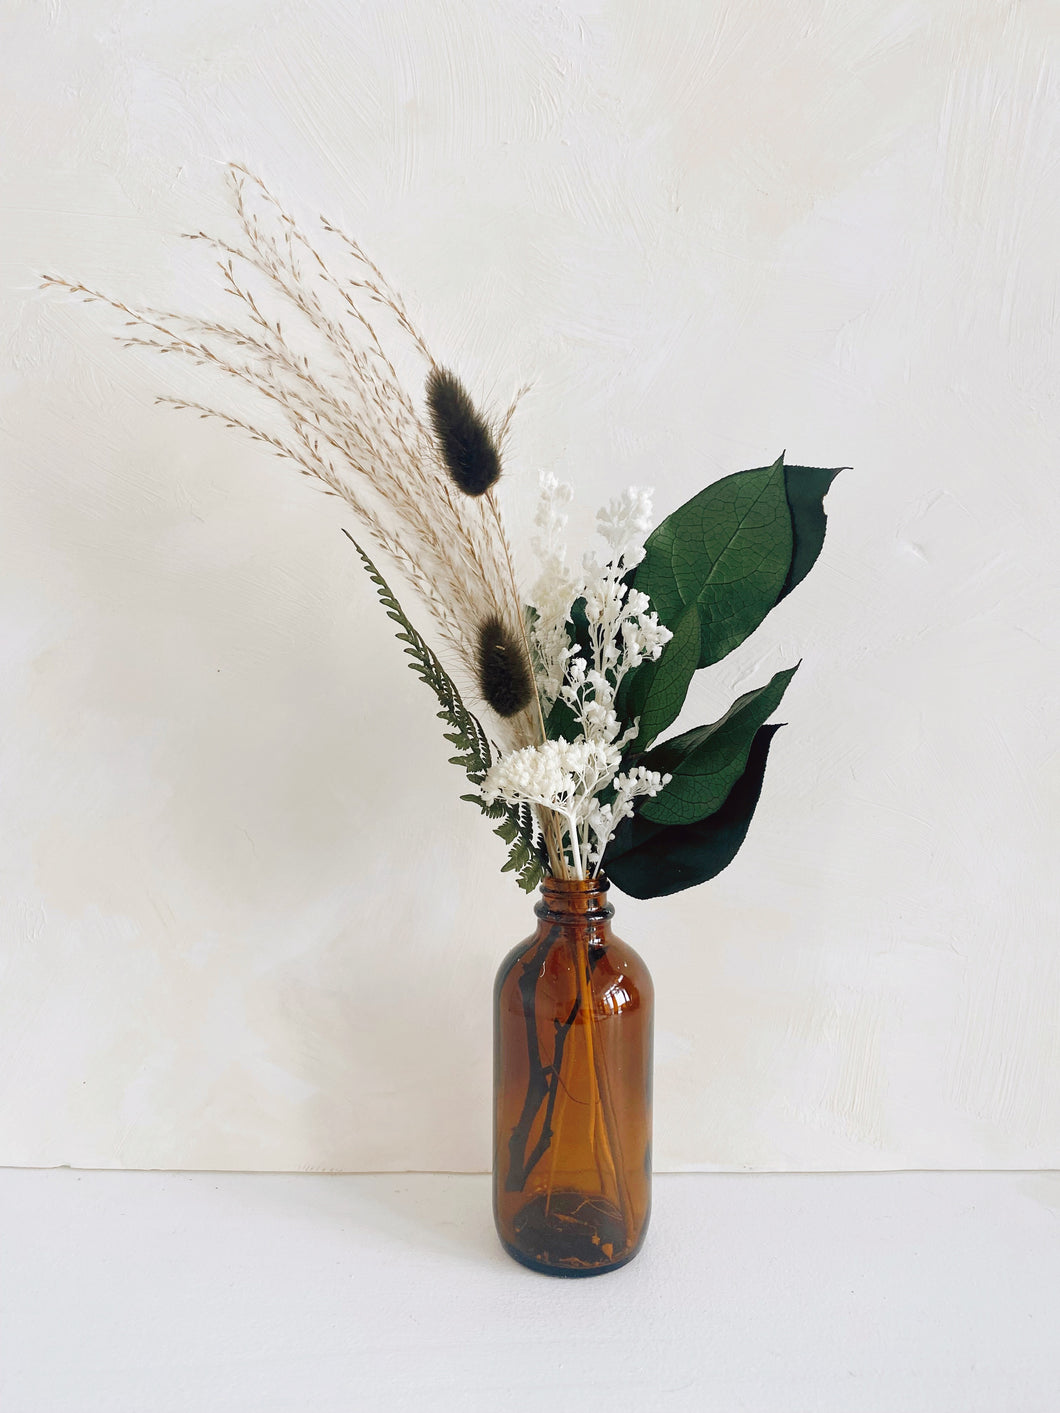 Mini Dried Floral Arrangements in Glass Bottle | Restaurant/Event Table Decor